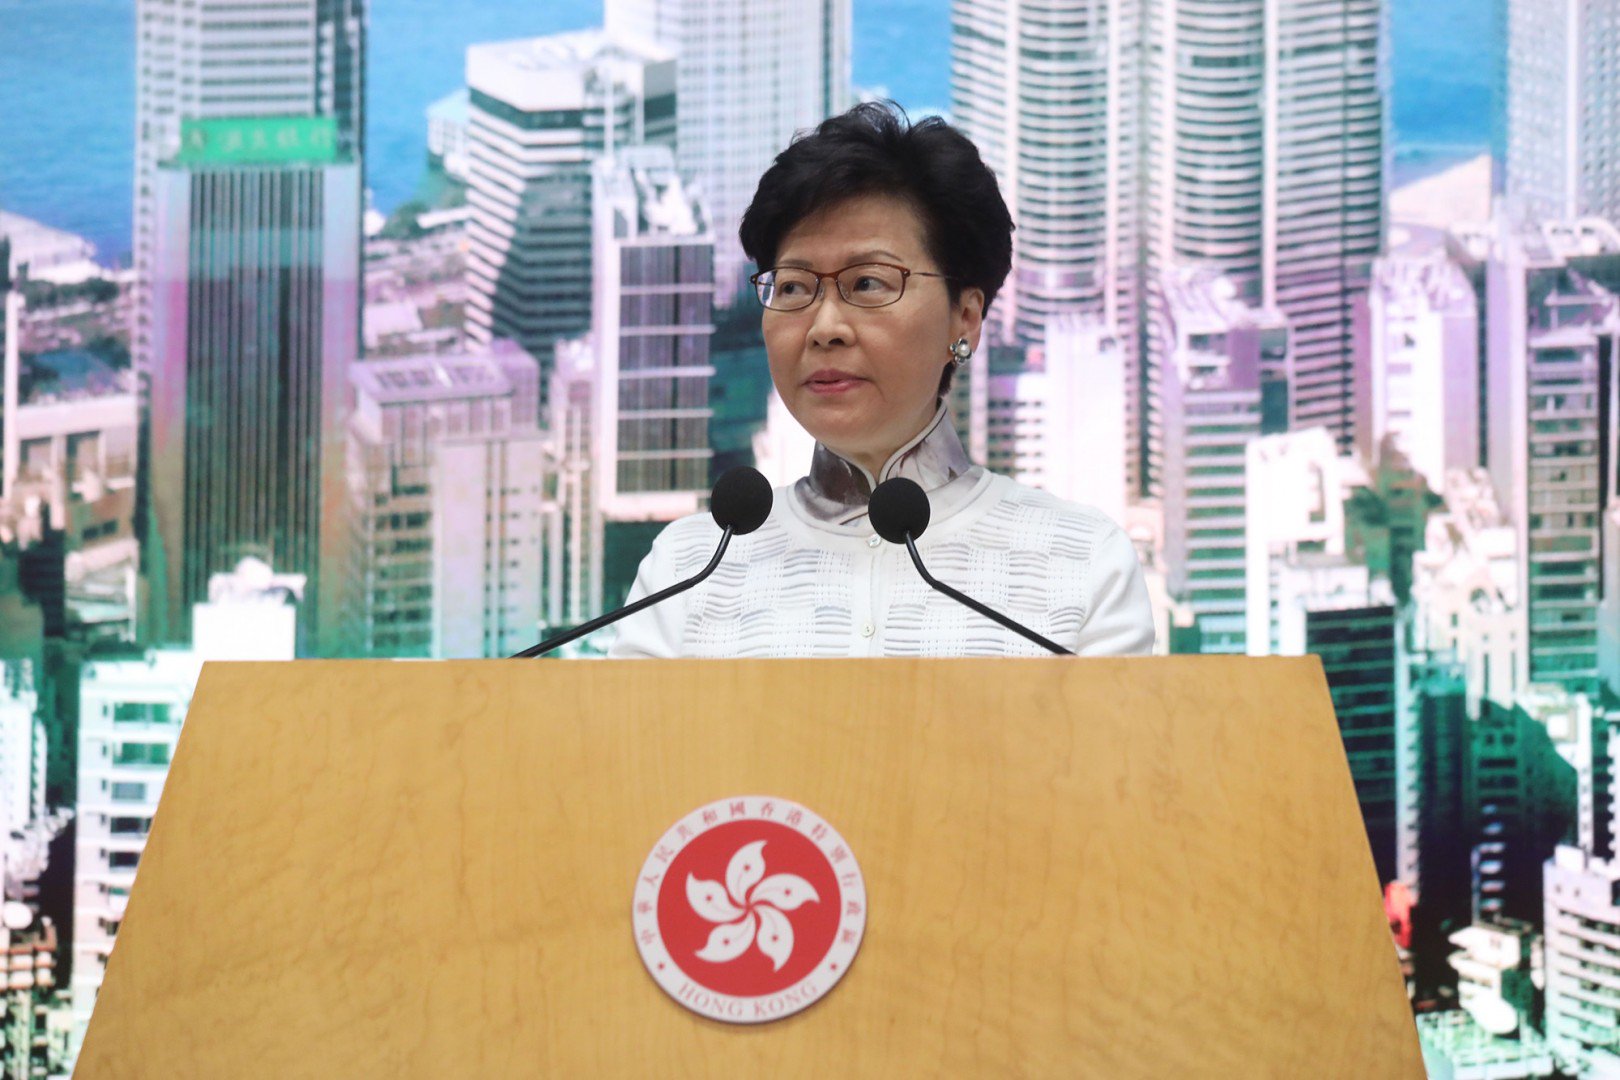 Hong Kong's Chief Executive Carrie Lam